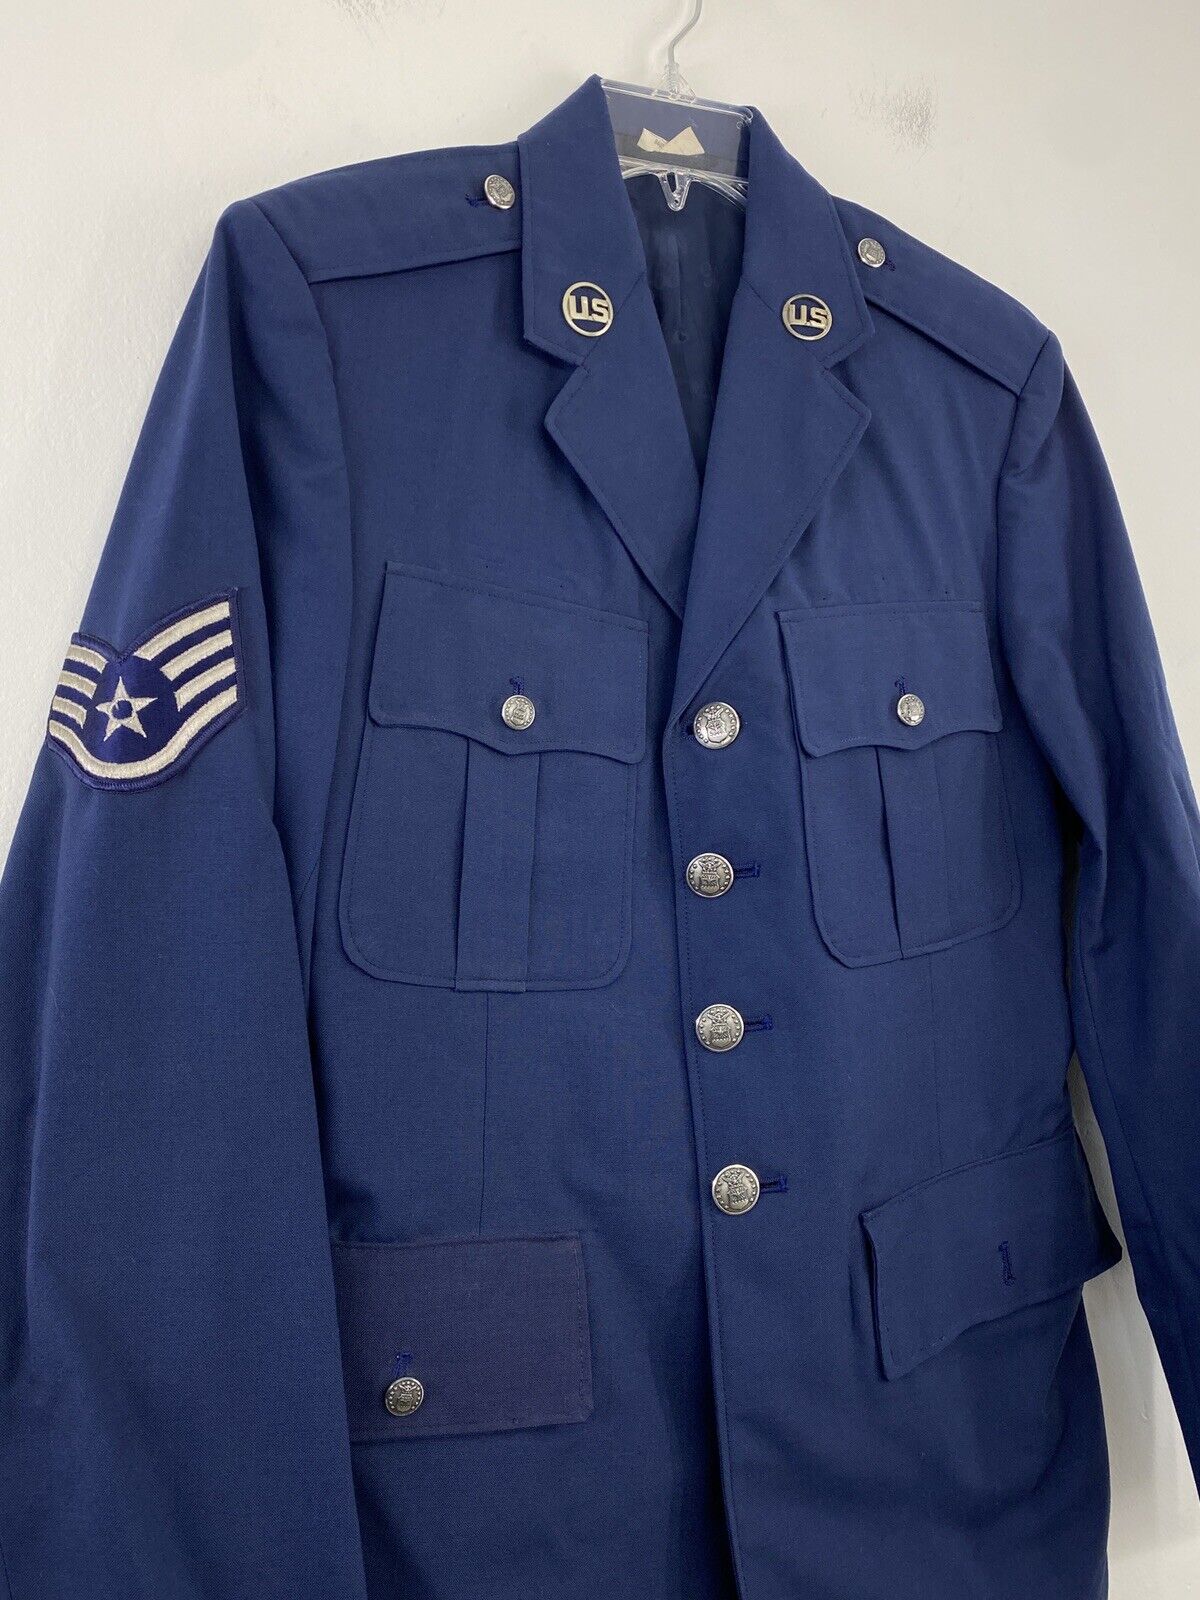 US Airforce Blazer Jacket Coat Uniform 39R & Cap Garrison Sz 7